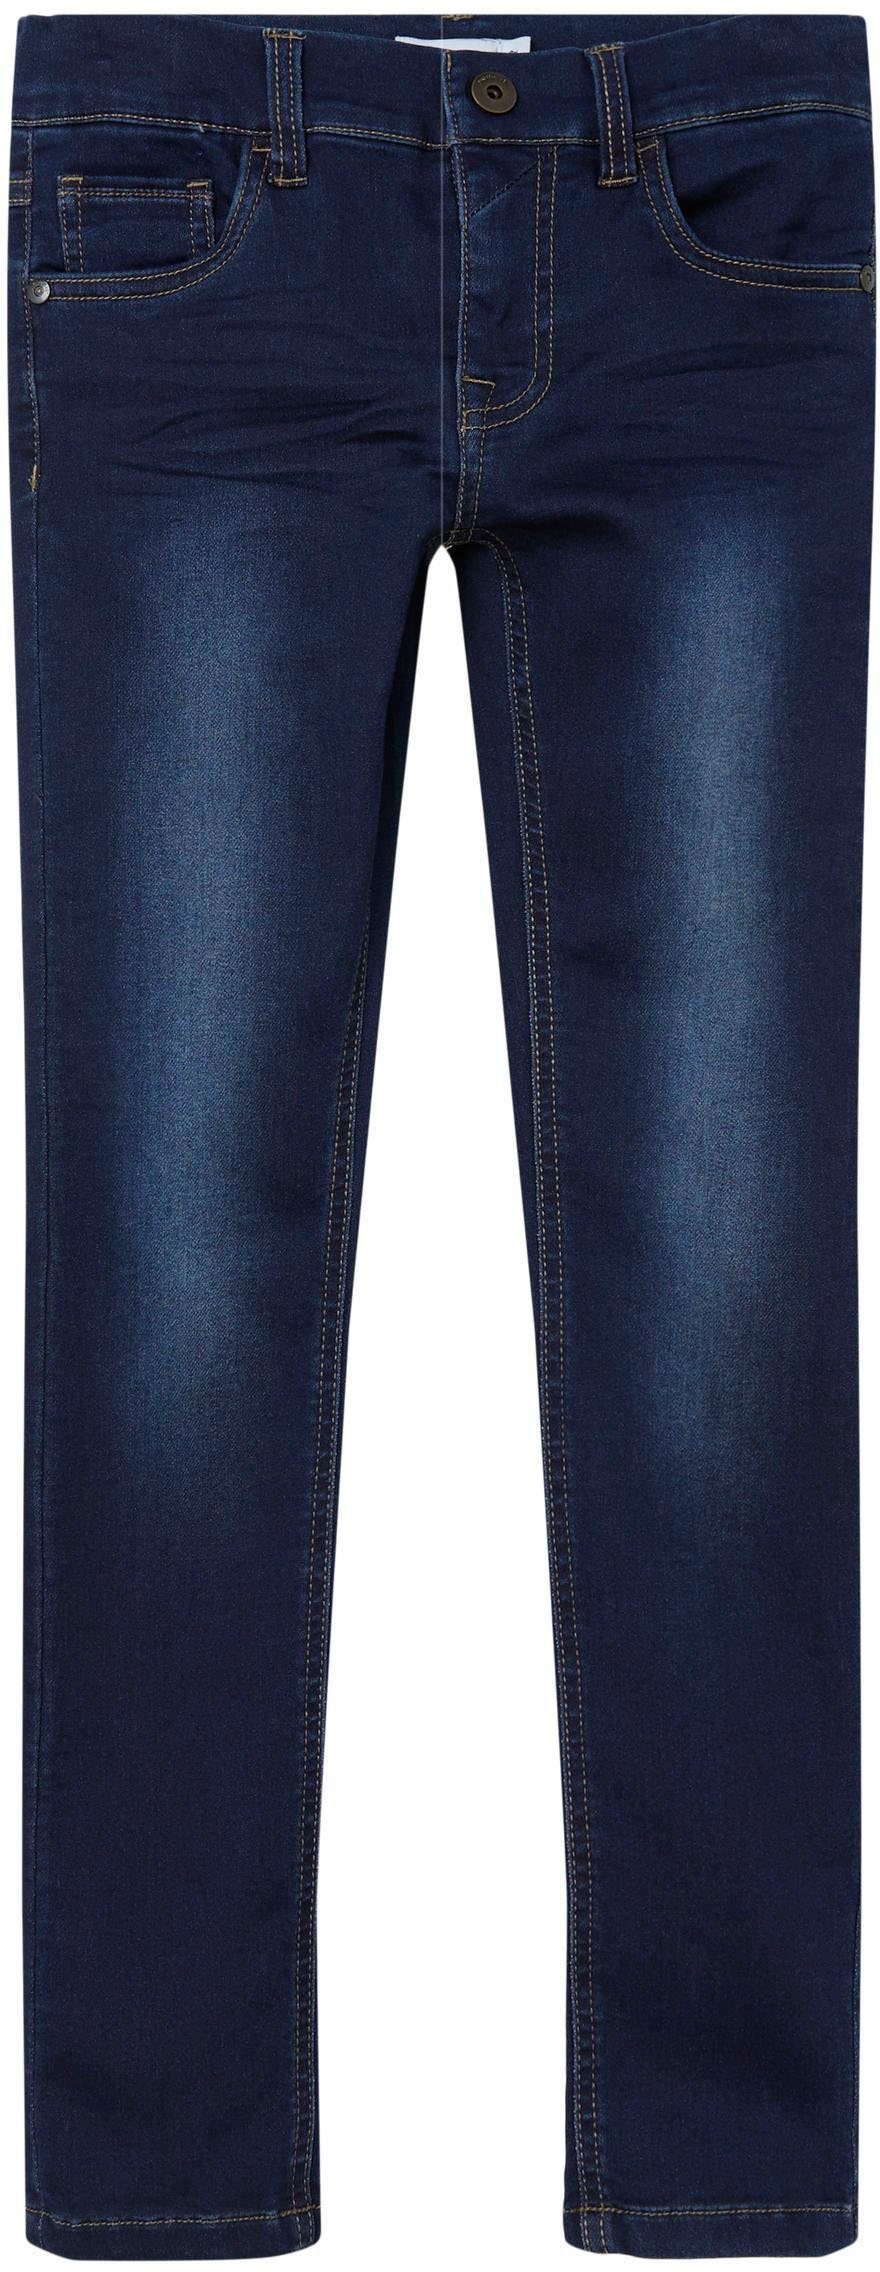 NKMTHEO PANT blue It Stretch-Jeans dark COR1 Name denim DNMTHAYER SWE